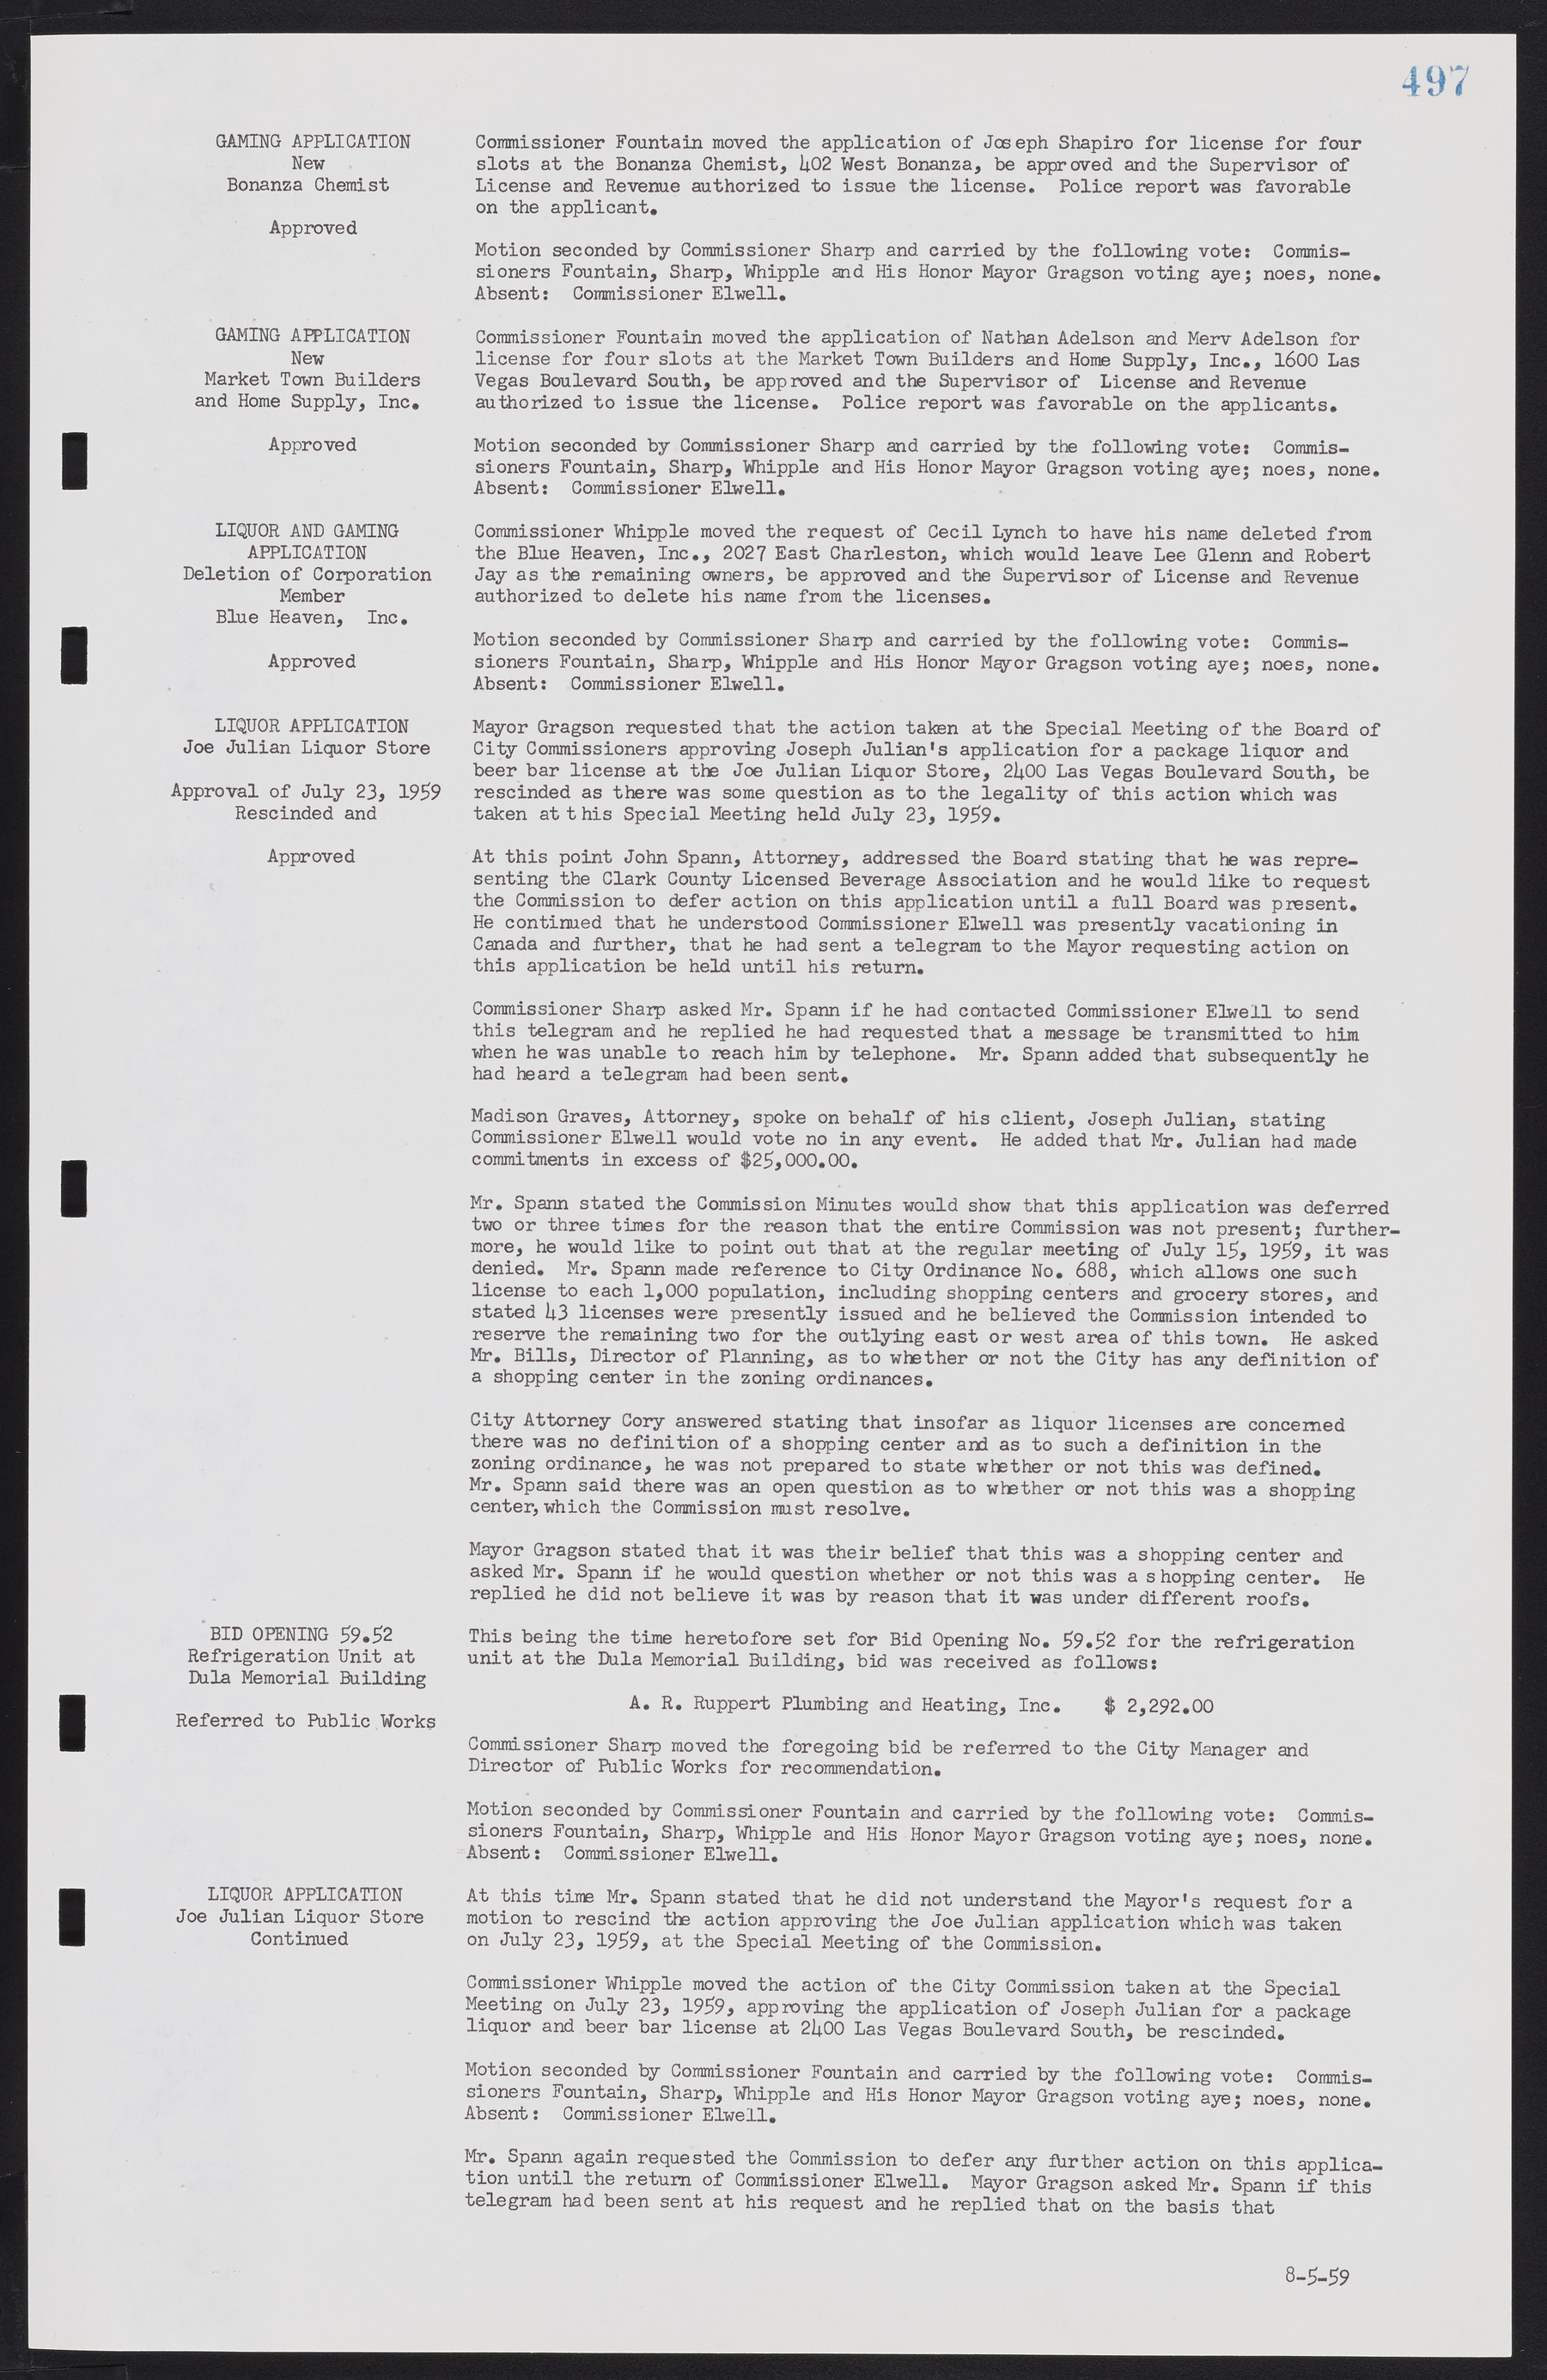 Las Vegas City Commission Minutes, November 20, 1957 to December 2, 1959, lvc000011-533